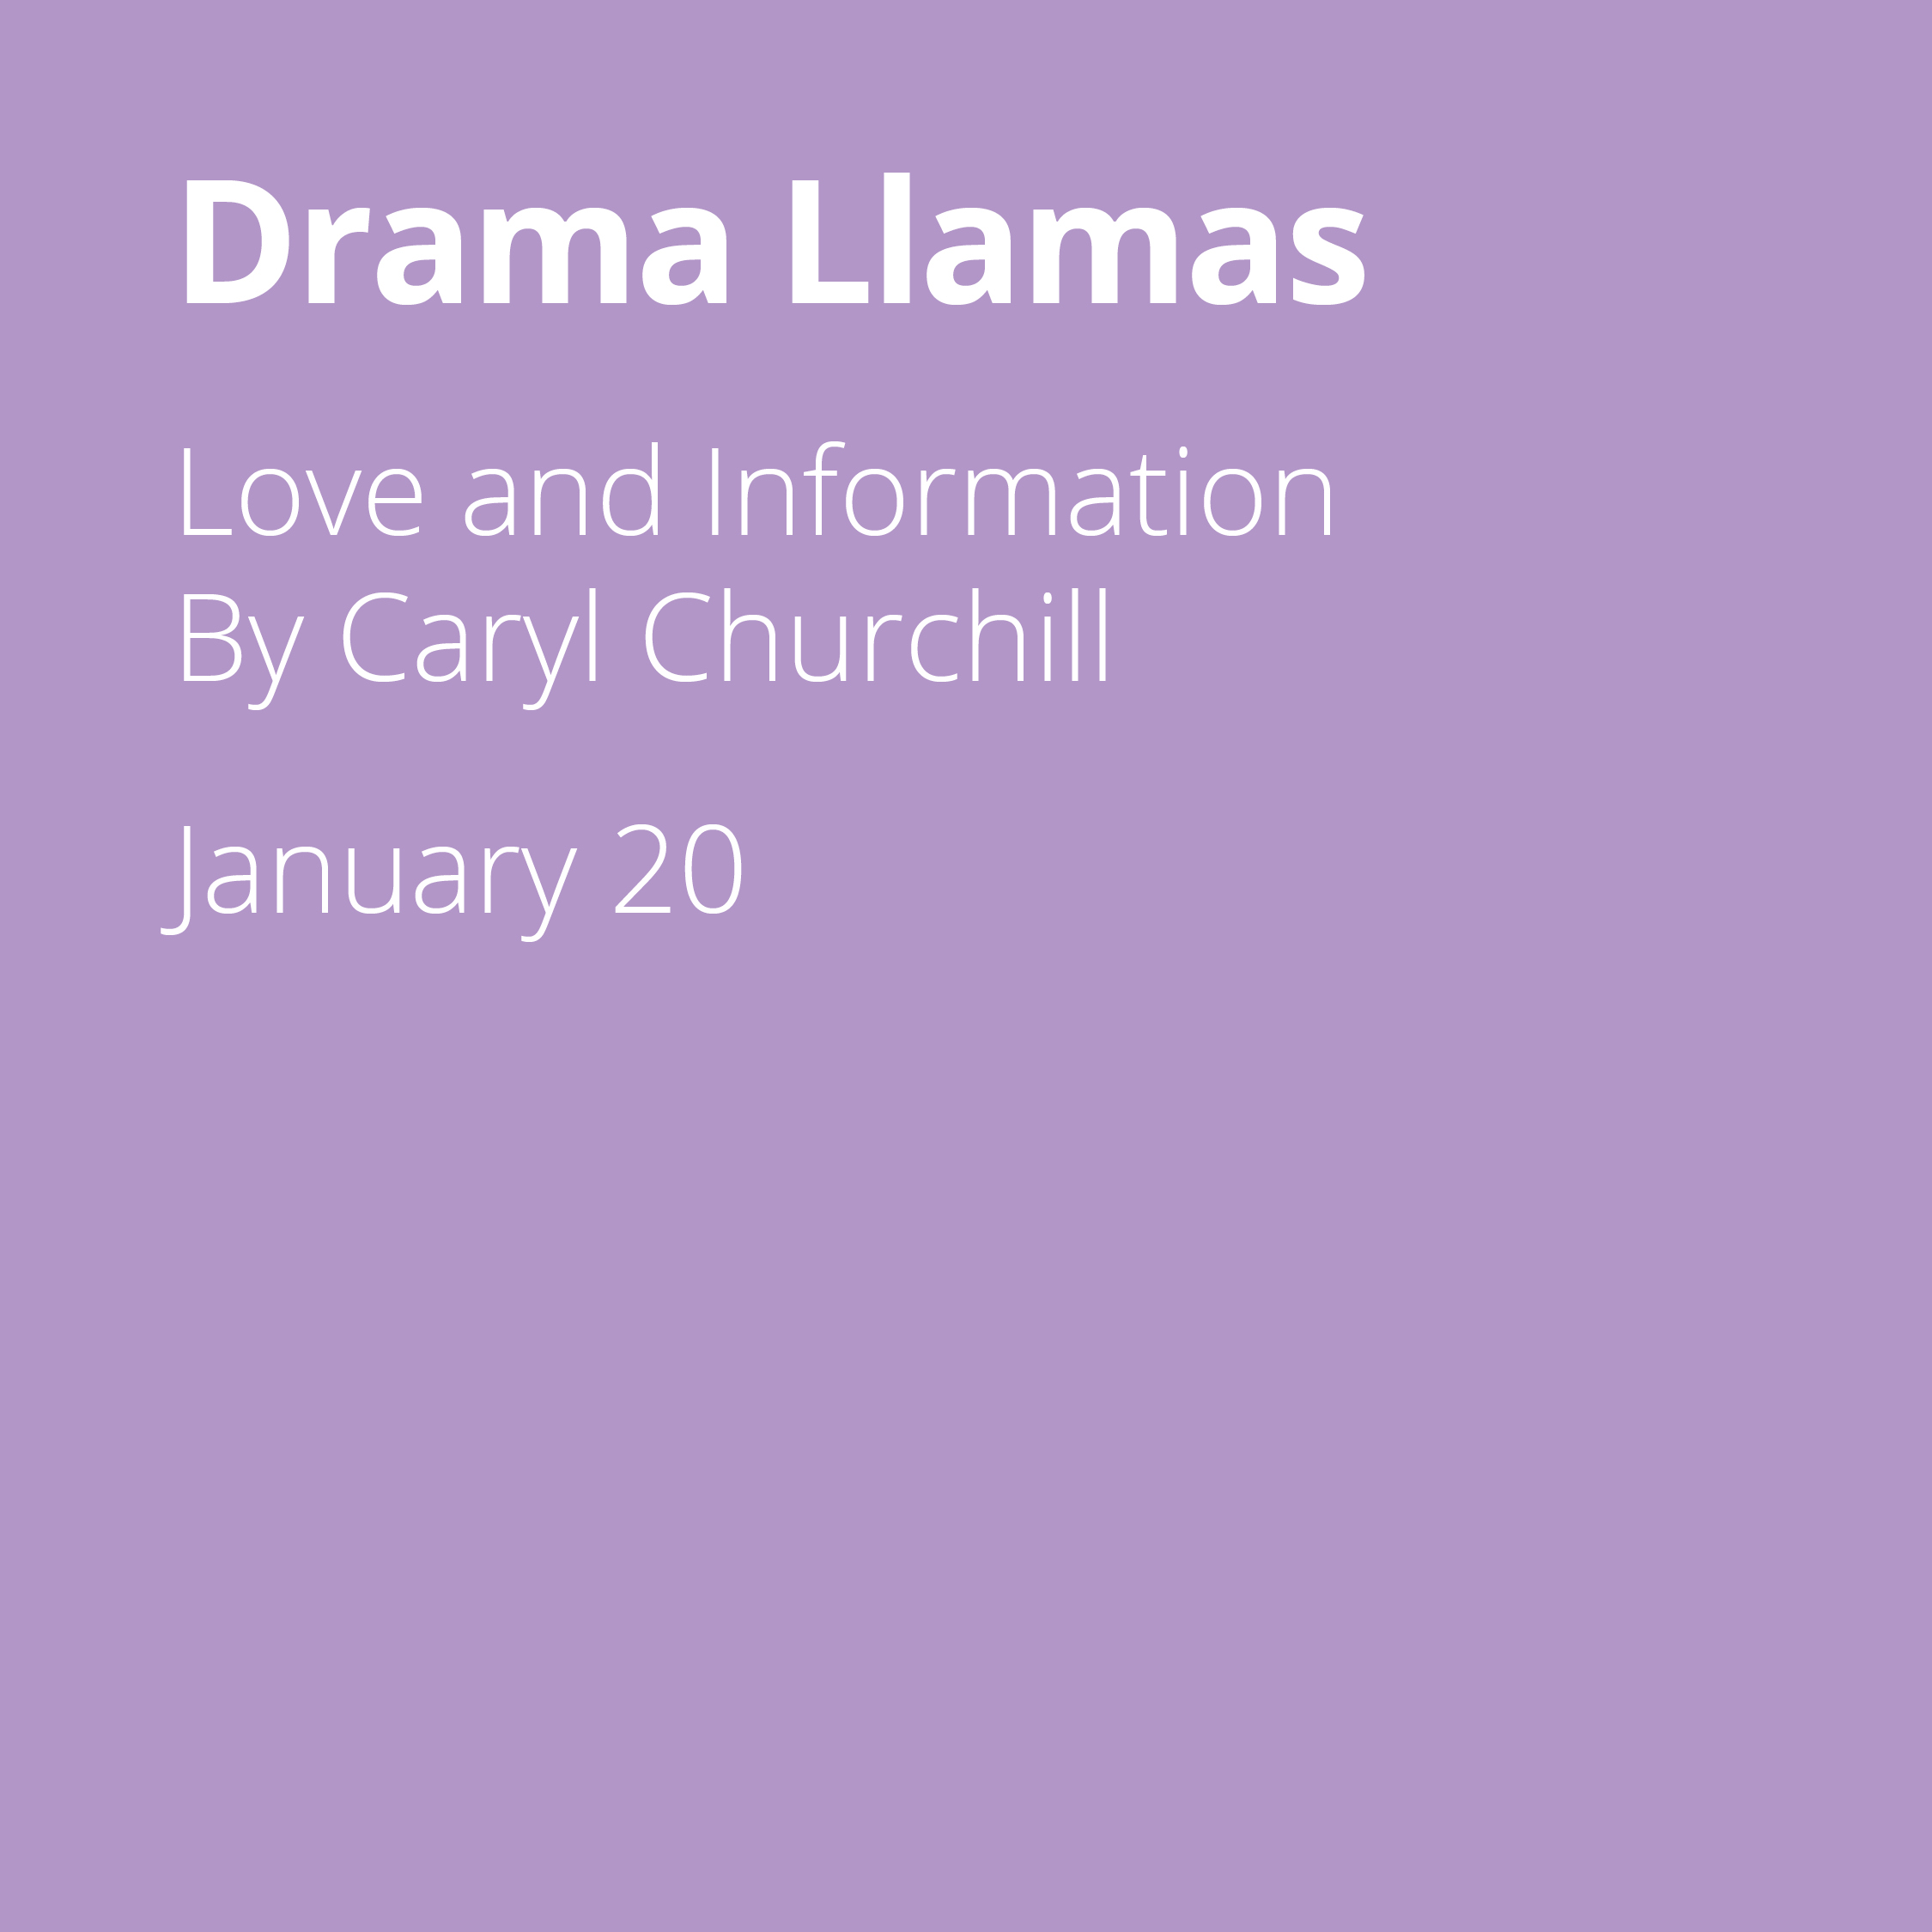 Drama Llamas